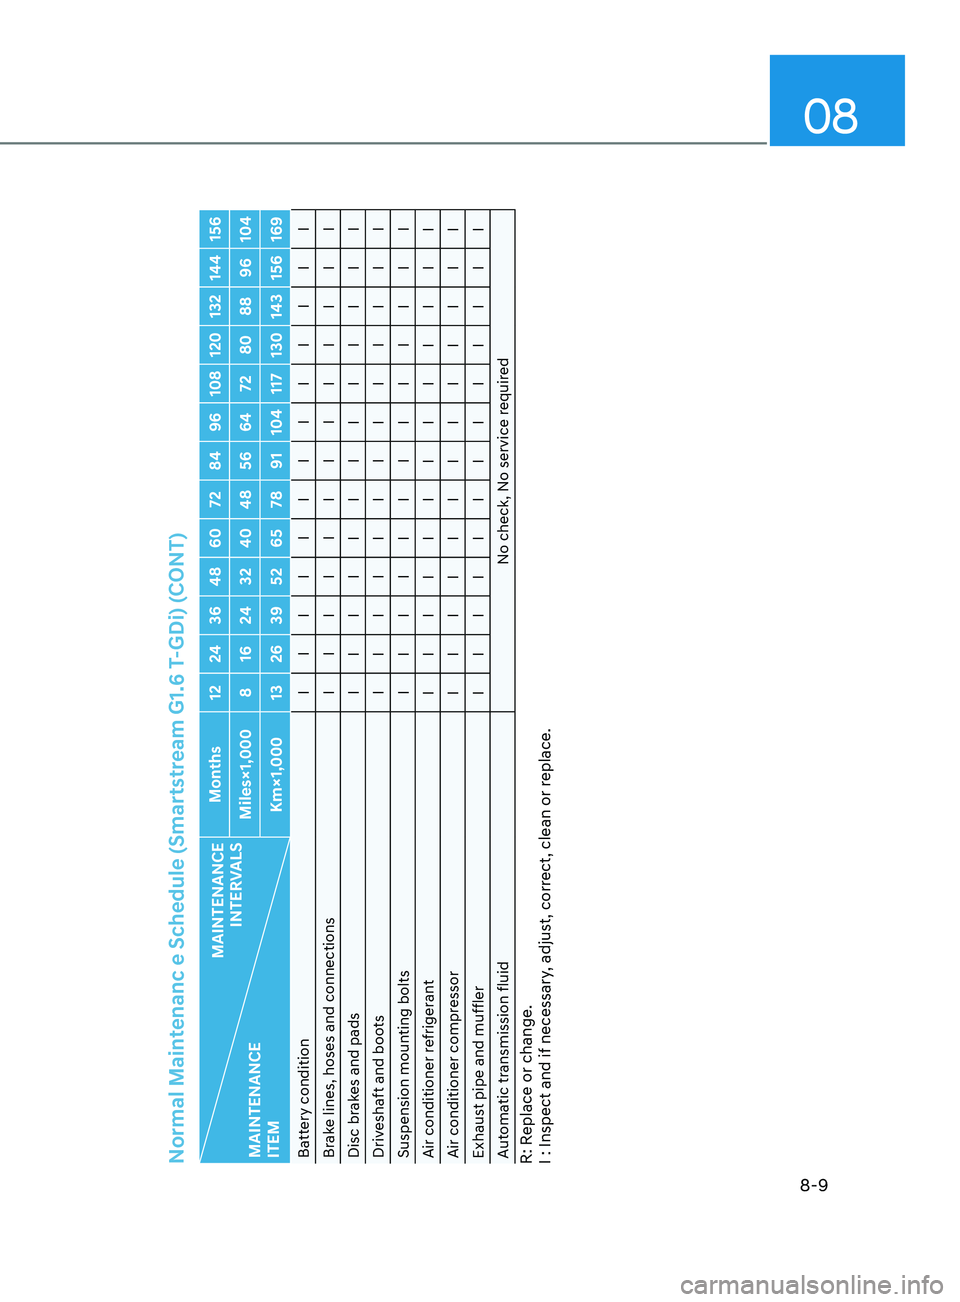 HYUNDAI SONATA 2022  Owners Manual 08
8-9
Normal Maintenanc e Schedule (Smartstream G1.6 T-GDi) (CONT)
MAINTENANCE  INTERVALS
MAINTENANCE  
ITEM Months 12 24 36 48 60 72 84 96 108 120 132 144 156
Miles×1,000 8 16 24 32 40 48 56 64 72 